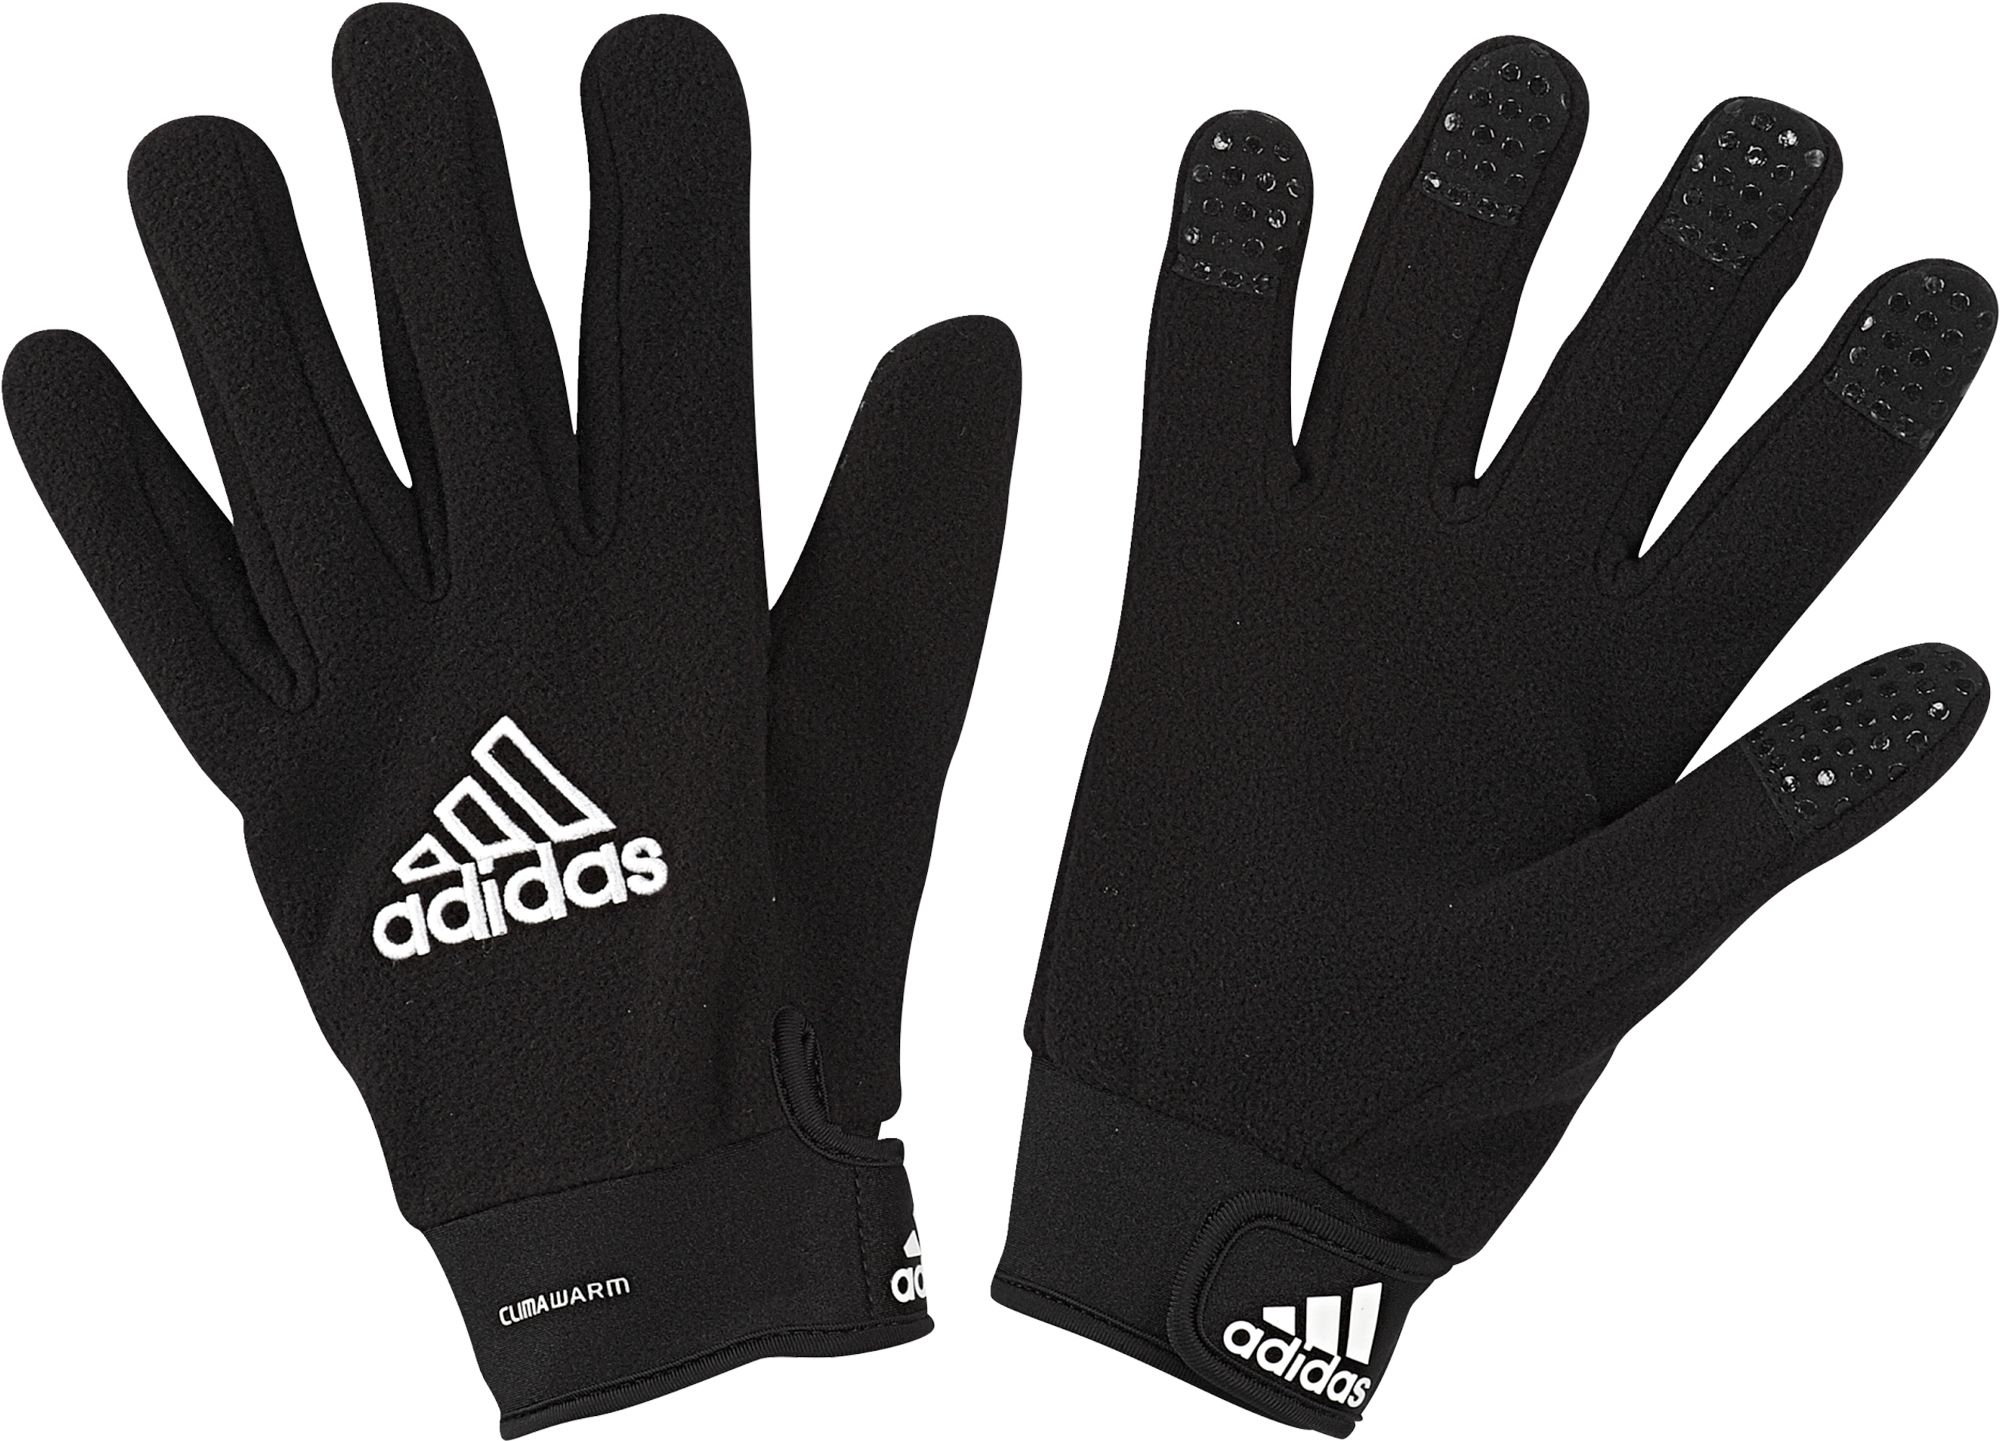 adidas performance field player fleece glove